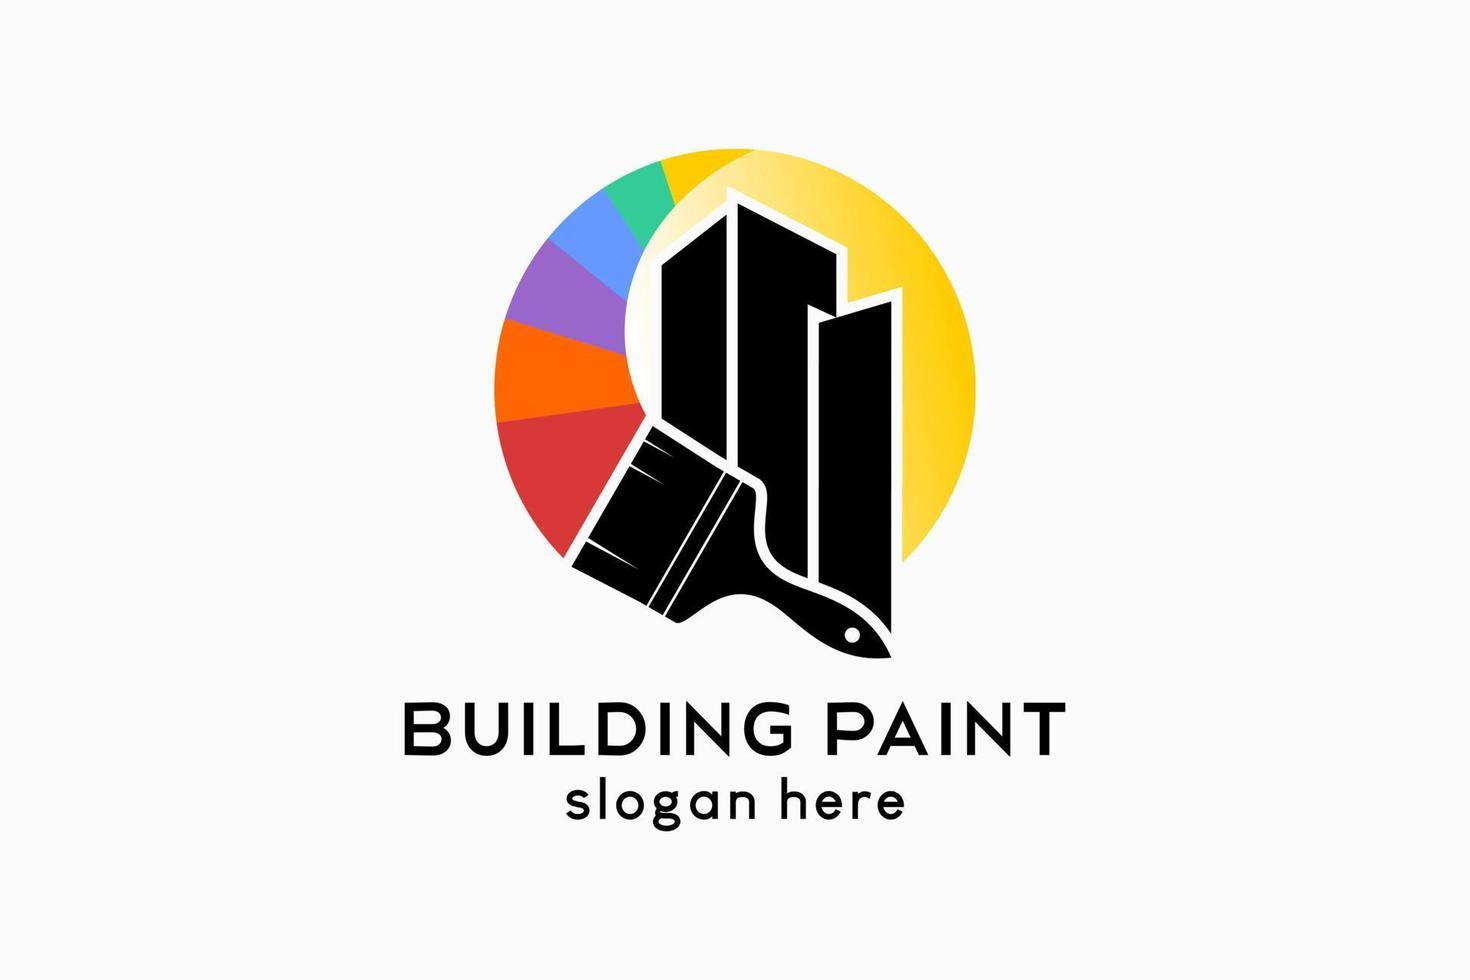 diseño de logotipo para pintura mural o pintura de construcción, una silueta de pincel de pintura combinada y un icono de construcción con un concepto de color arco iris en puntos o sol vector